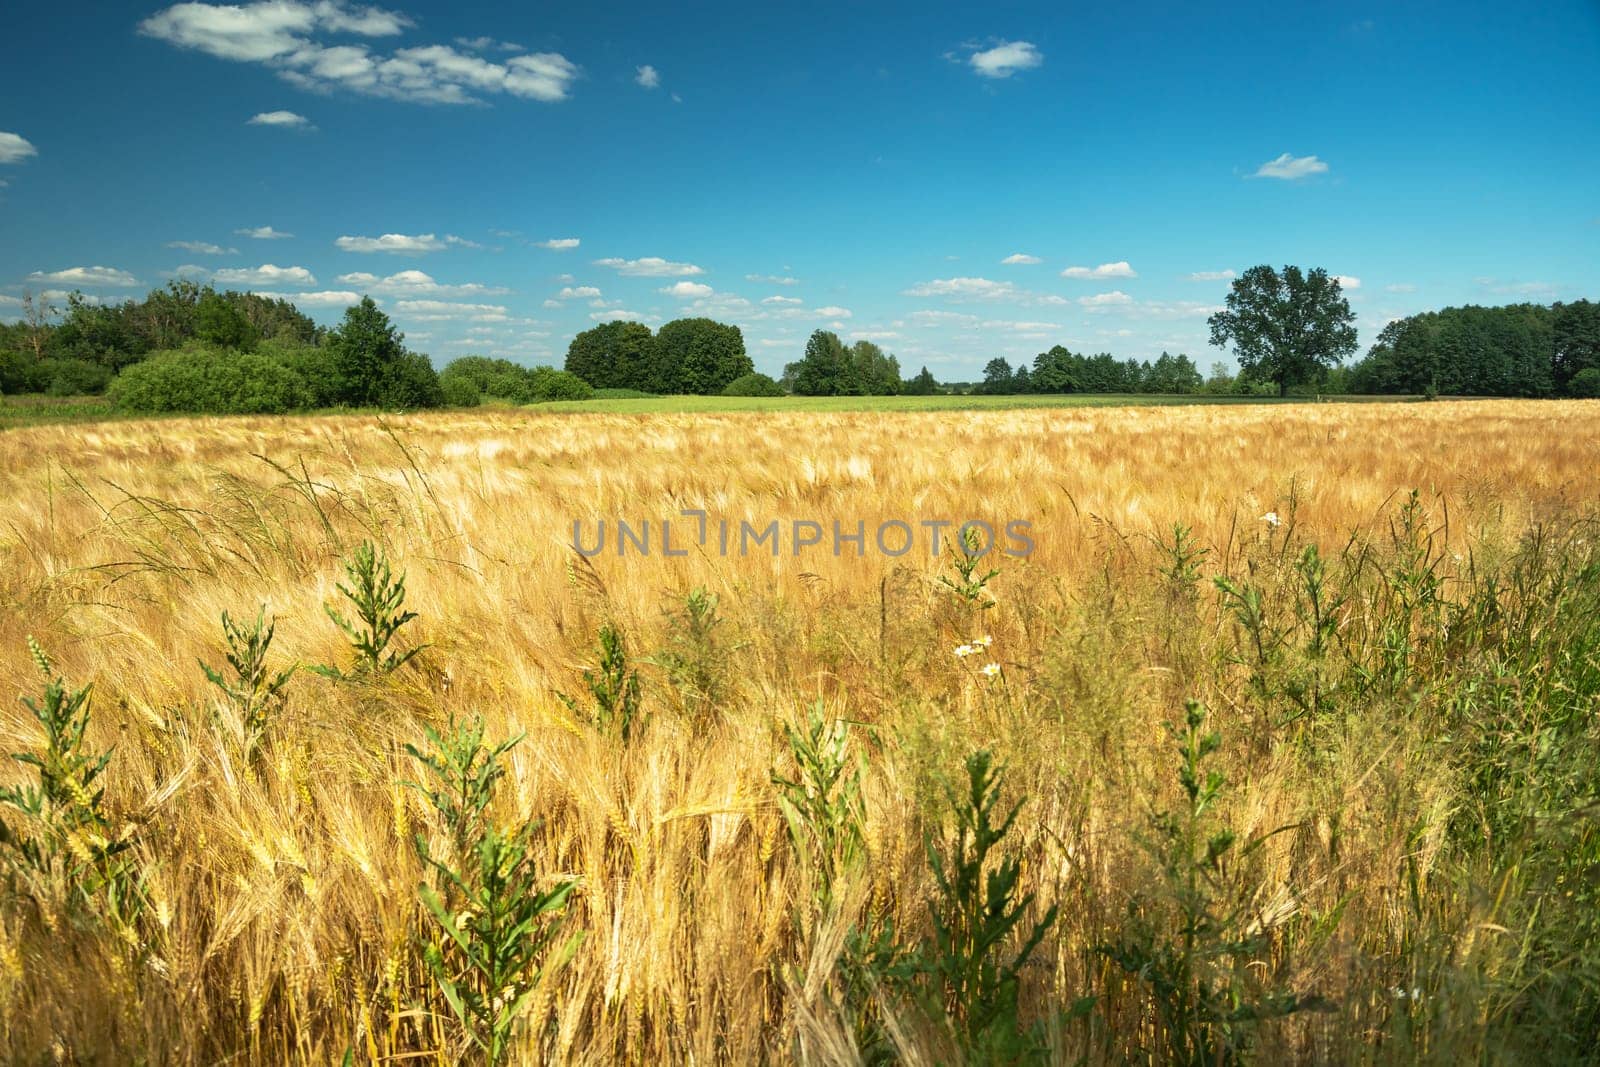 Weeds in golden barley grain, agricultural summer view by darekb22